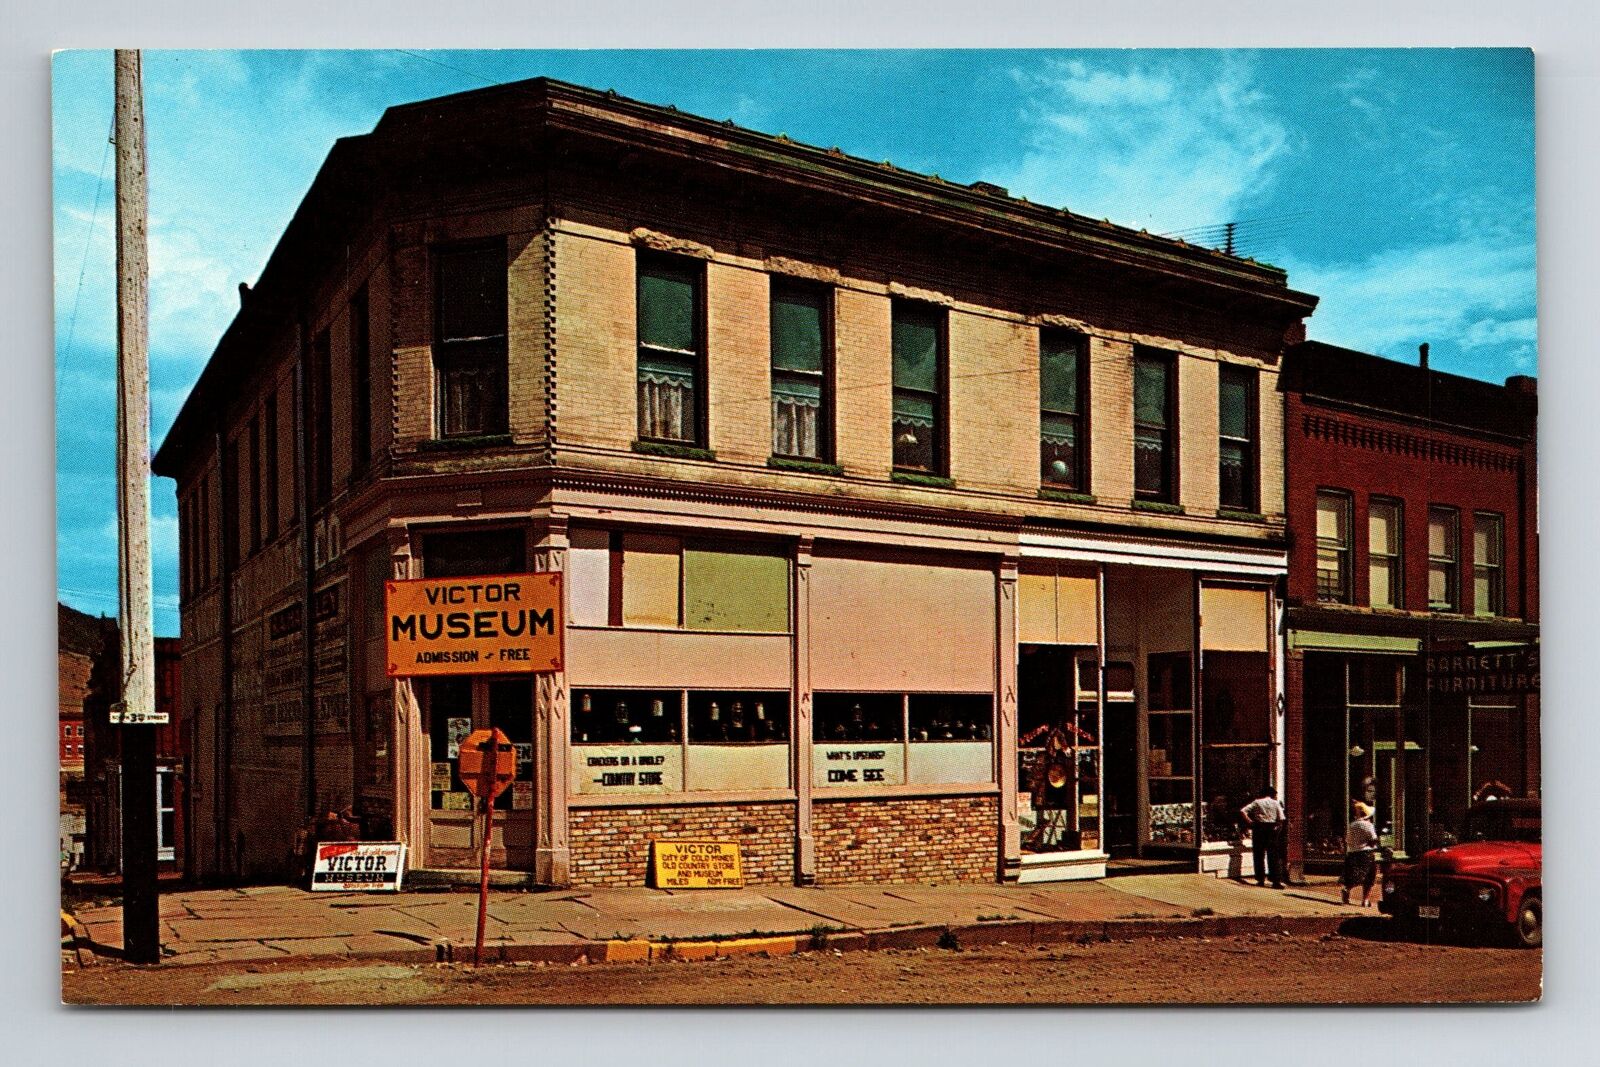 Victor CO-Colorado, The Victor Museum, Outside, Vintage Postcard